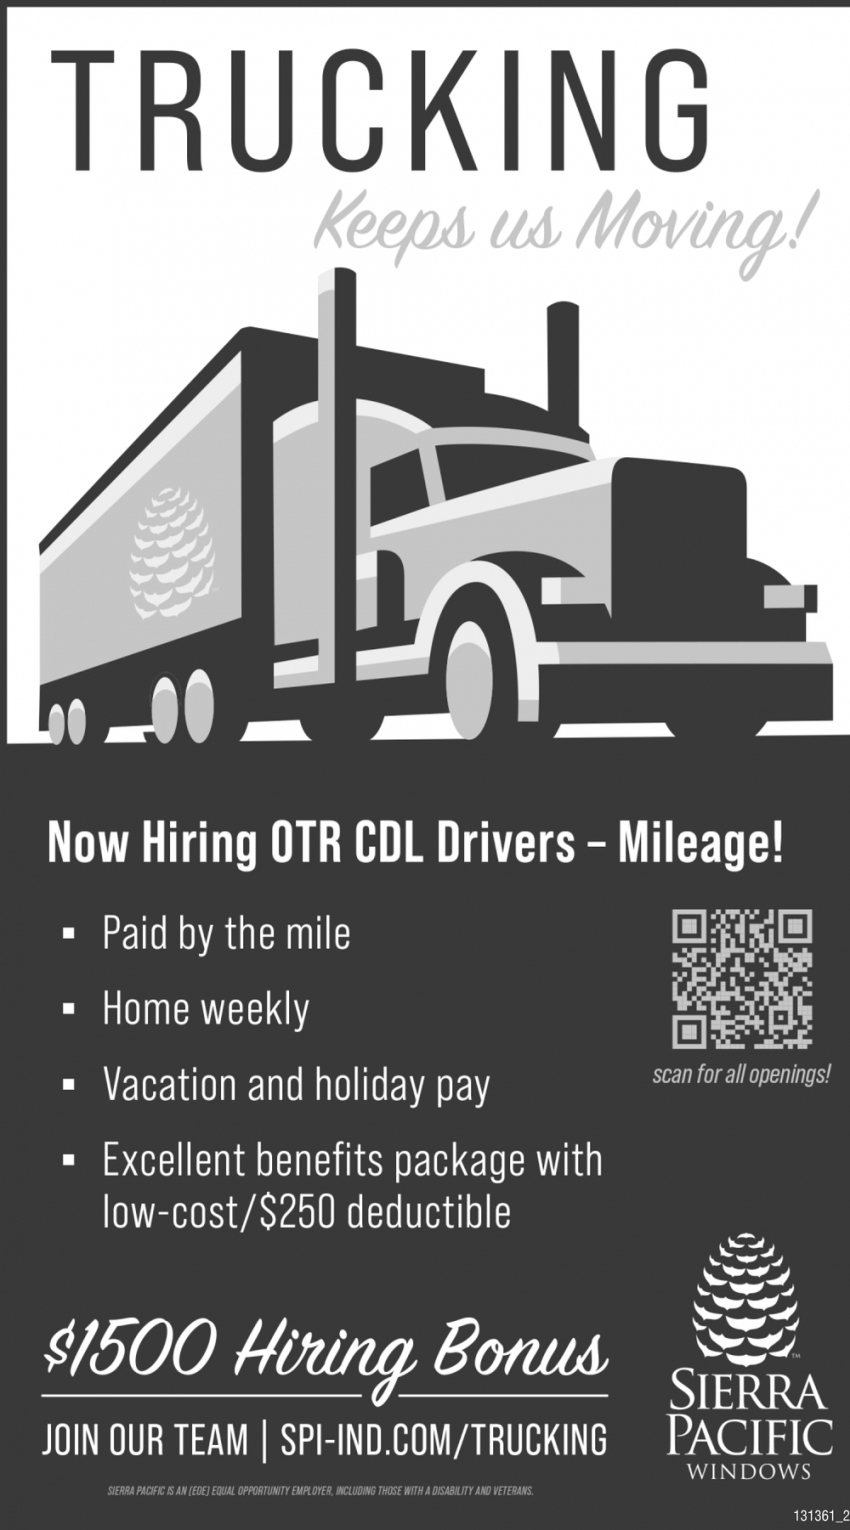 OTR CDL Drivers